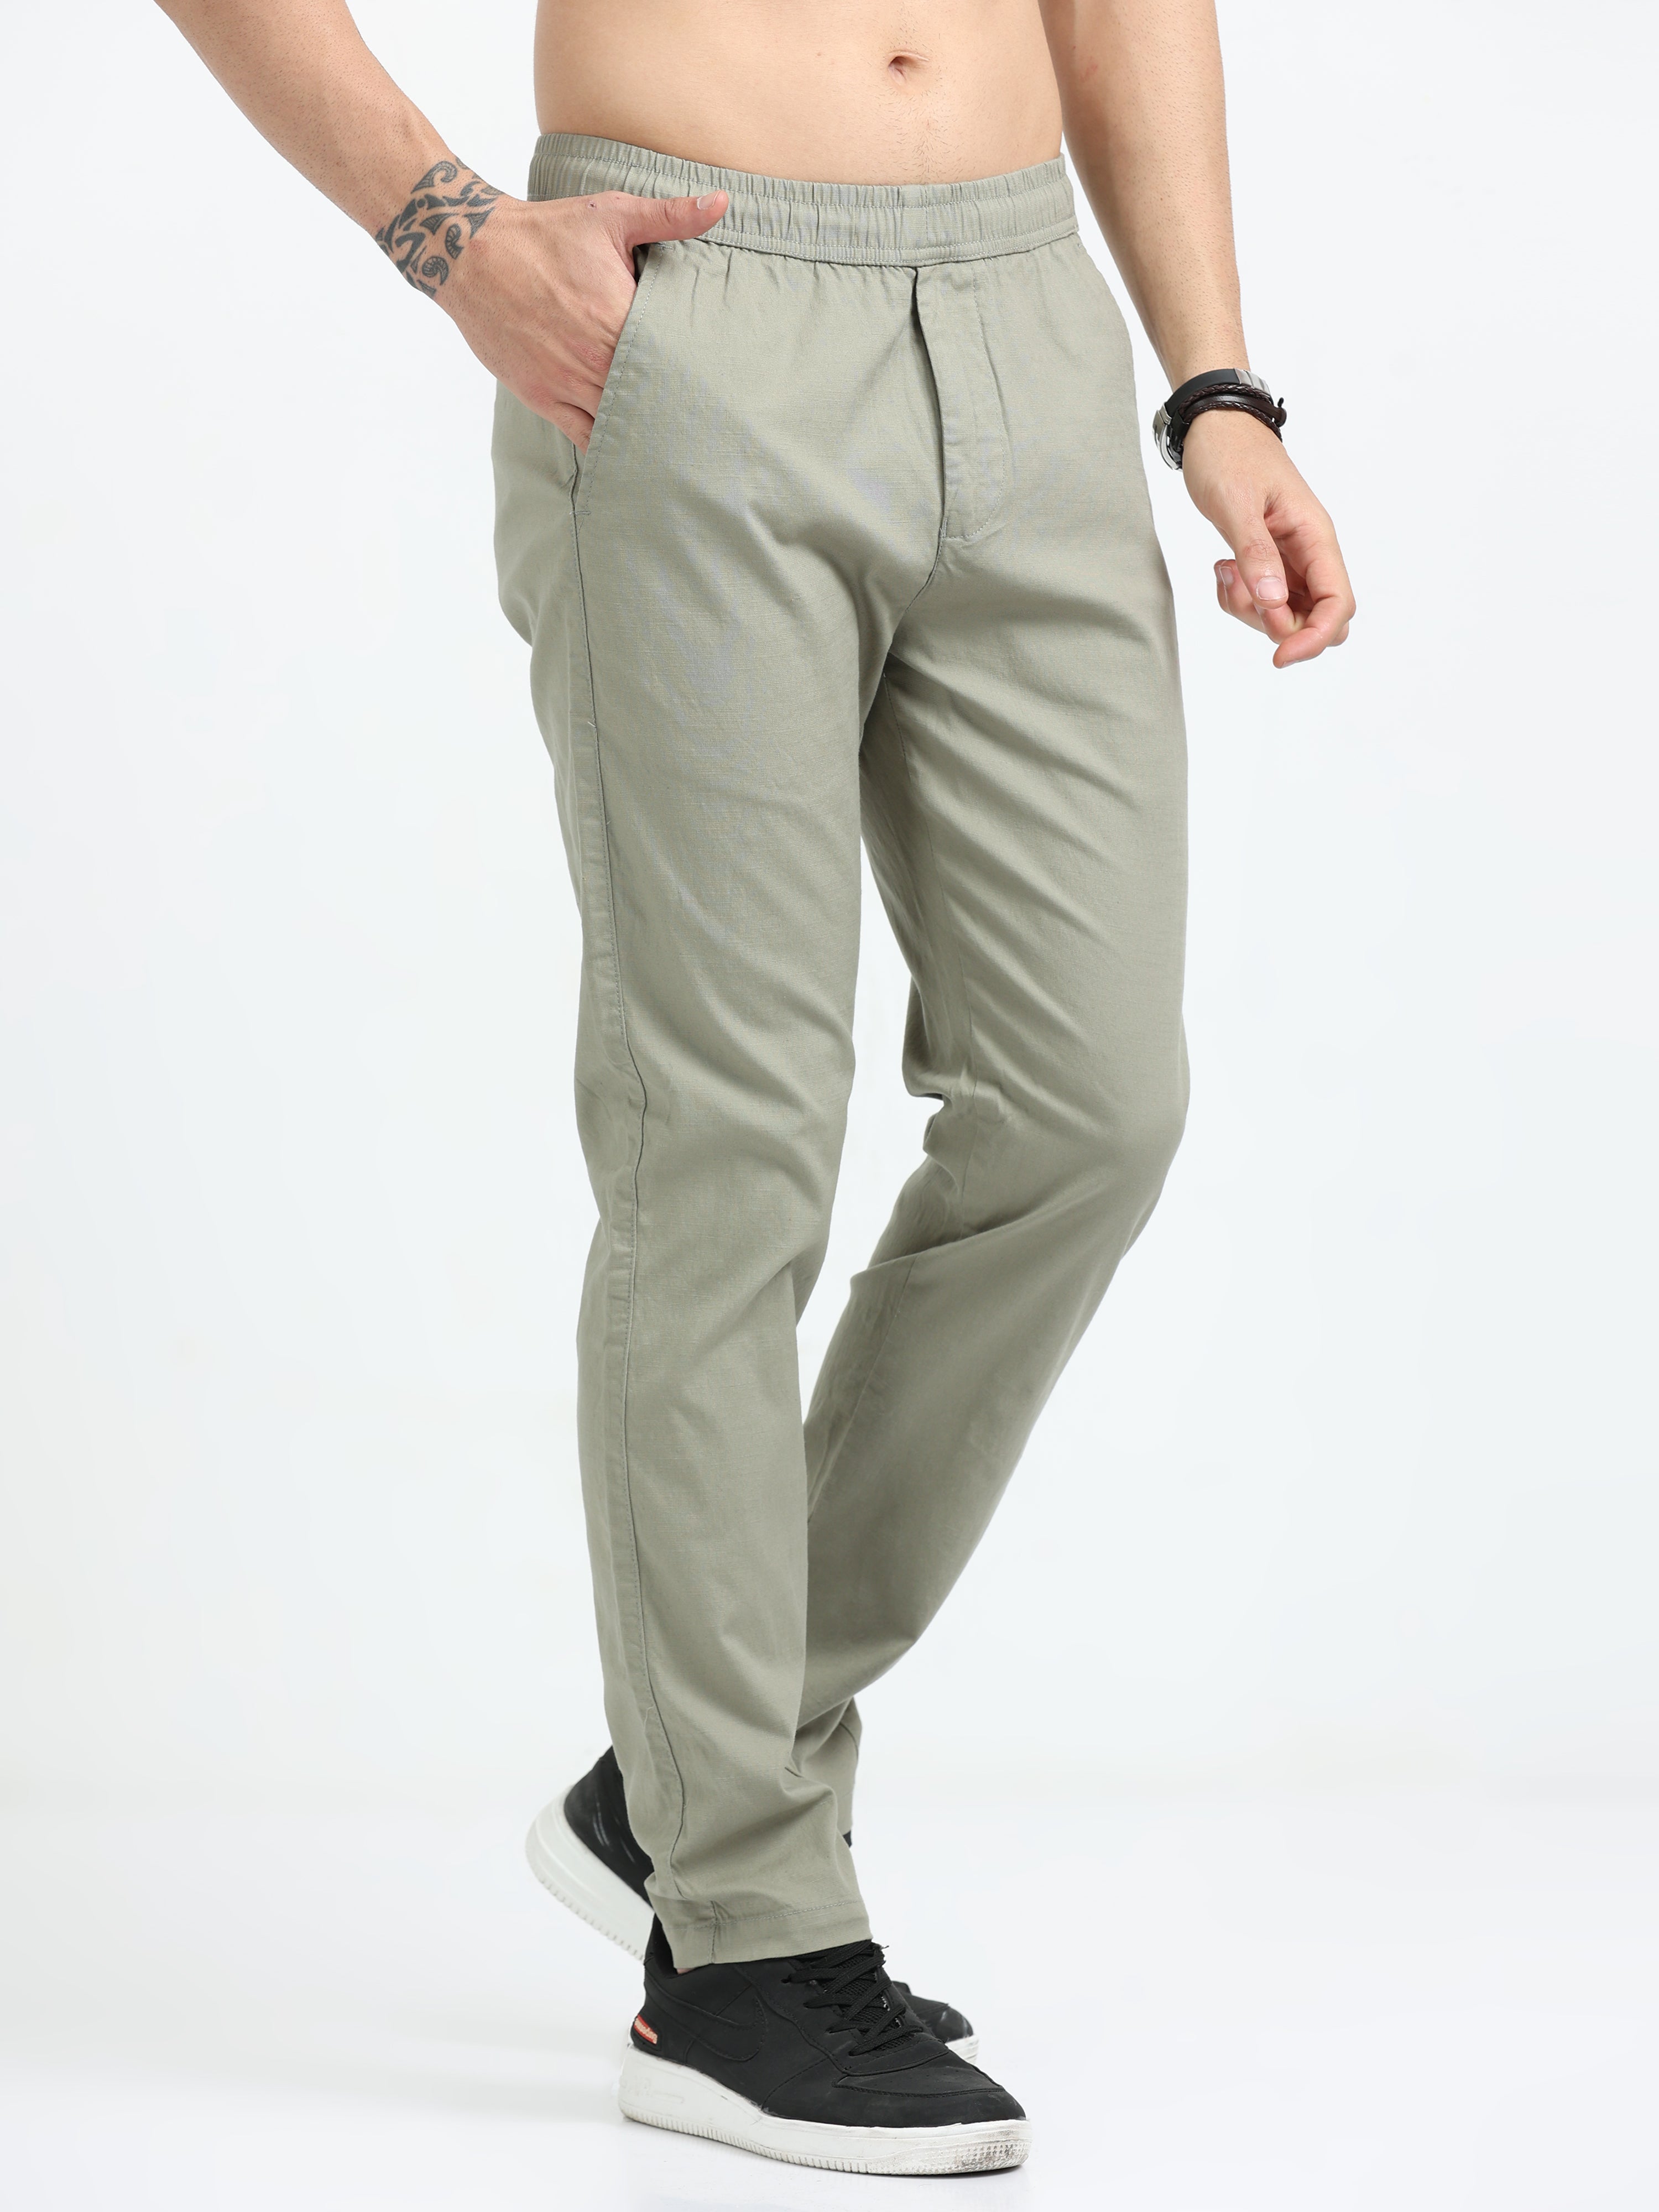 HSMQHJWE Mens Linen Dress Pants L Cargo Wear Cargo Men'S Full 6 Pocket Work  Pants Trousers Men'S Pants - Walmart.com